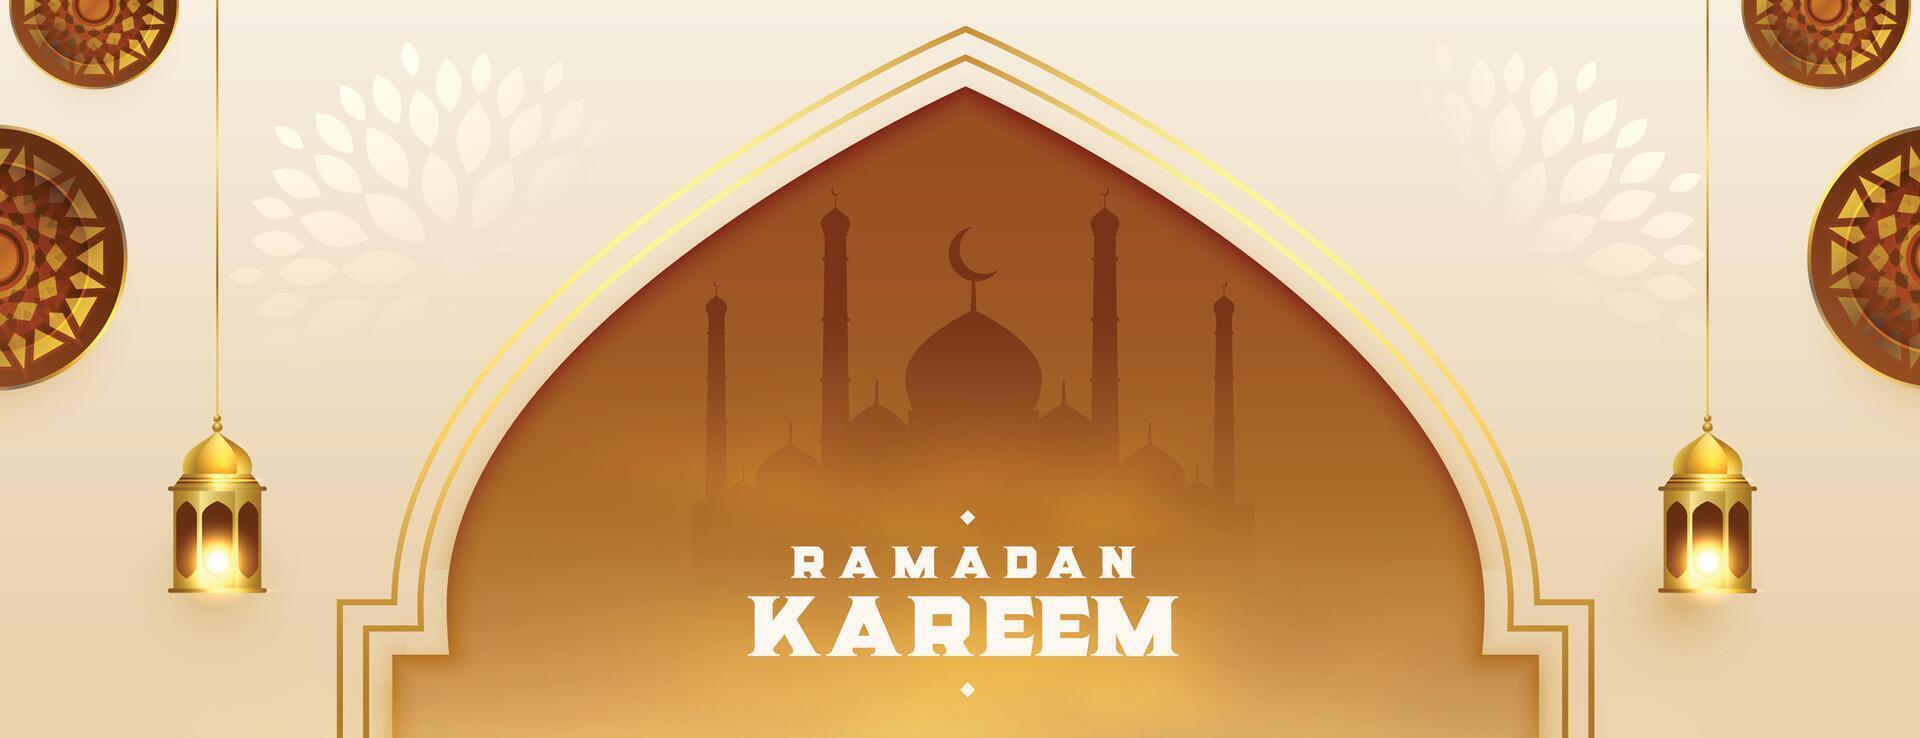 Arabisch Ramadan kareem Muslim Festival Banner Design vektor